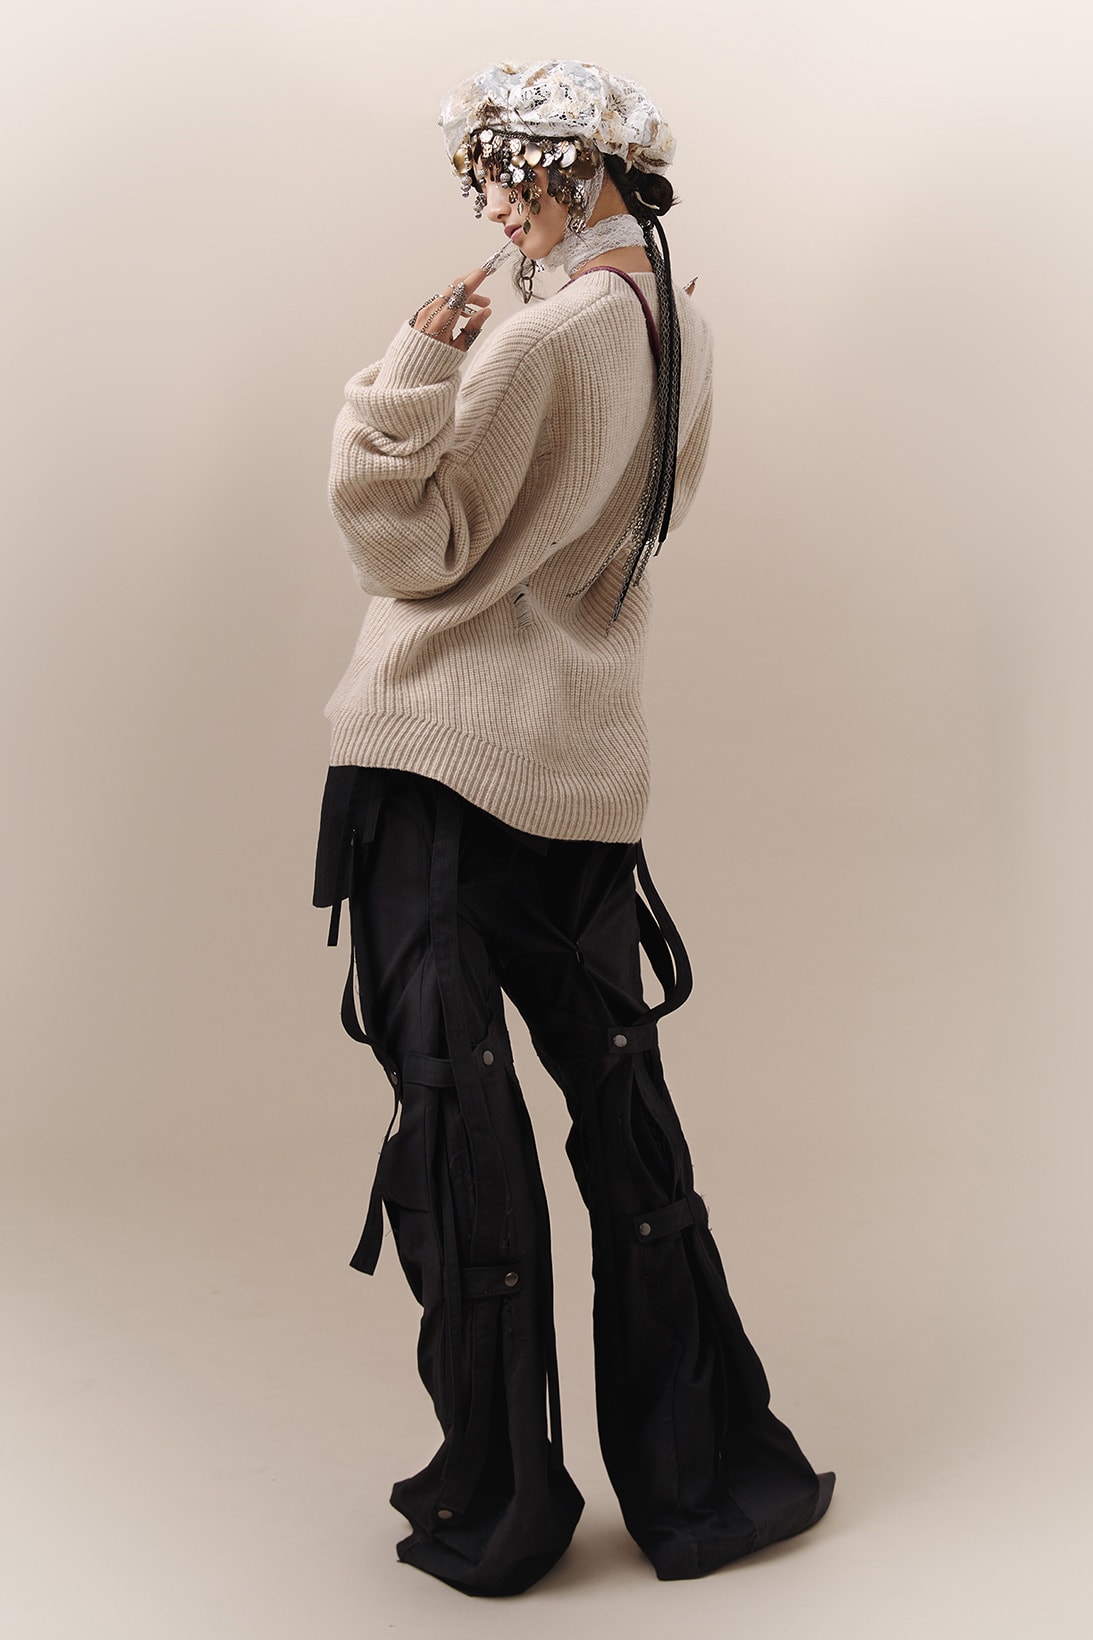 professor e fall winter collection womenswear lookbook knitwear sweaters coats taiwan emerging designer